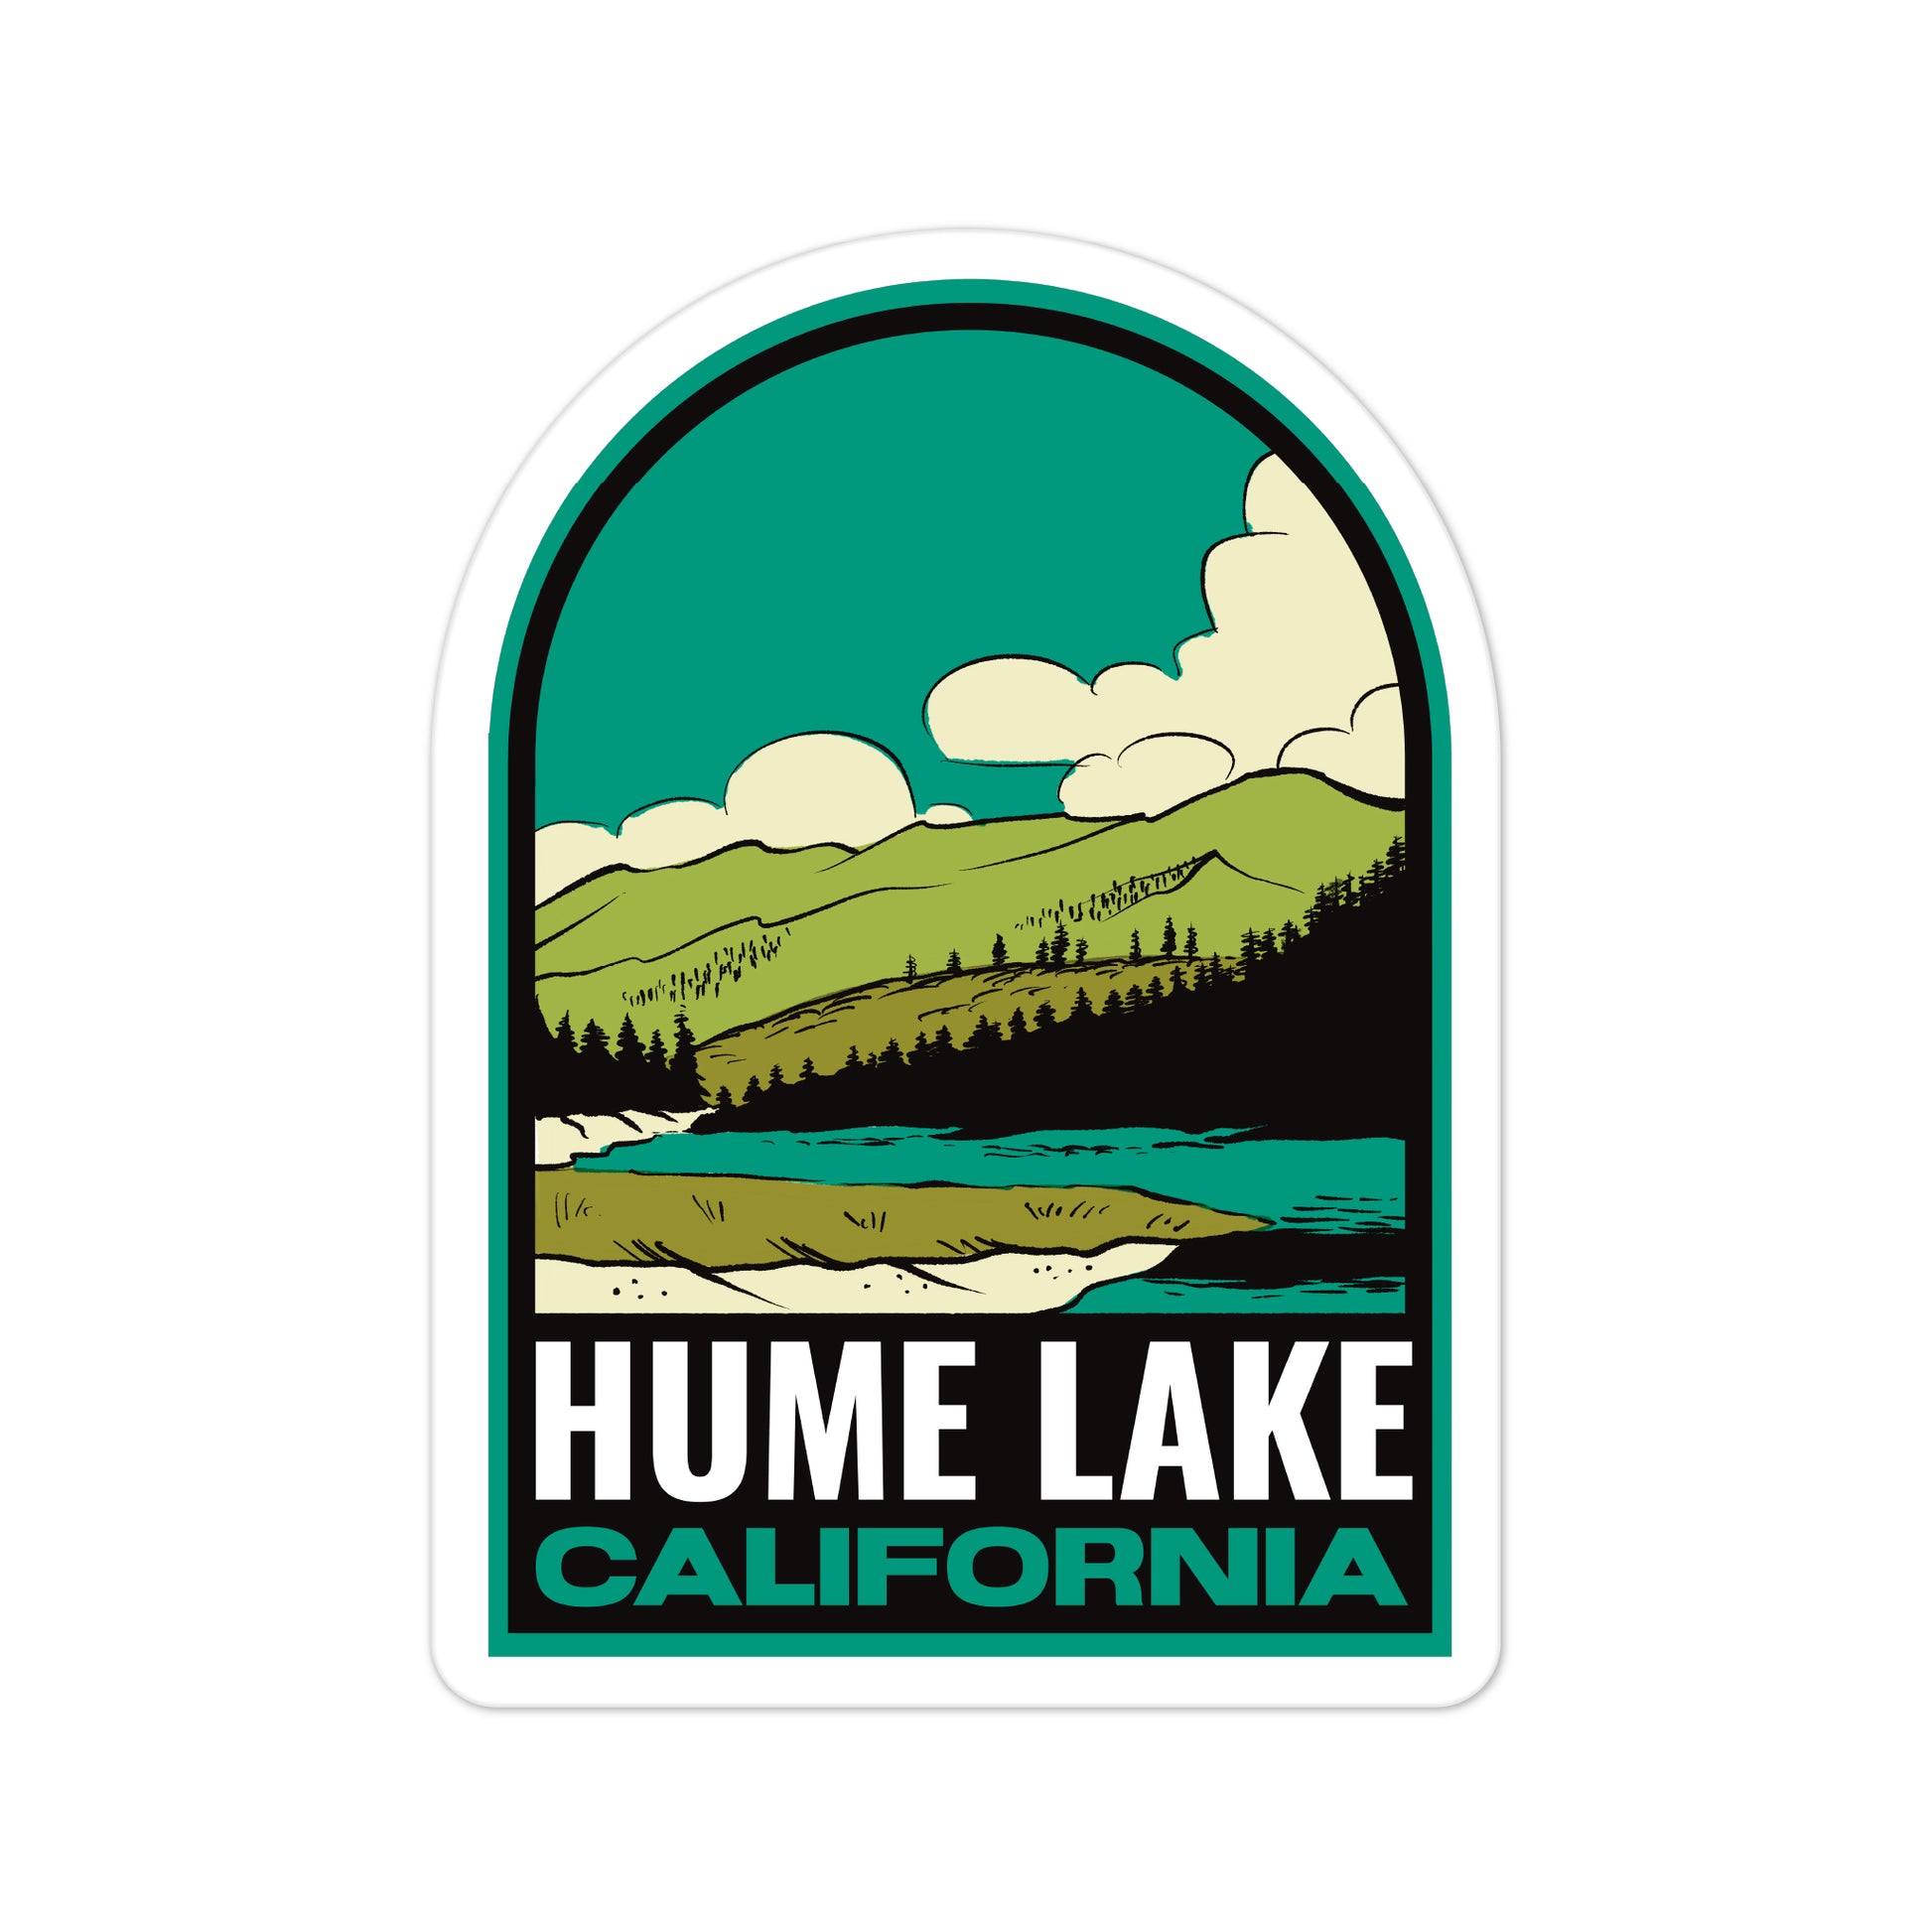 A sticker of Hume Lake California